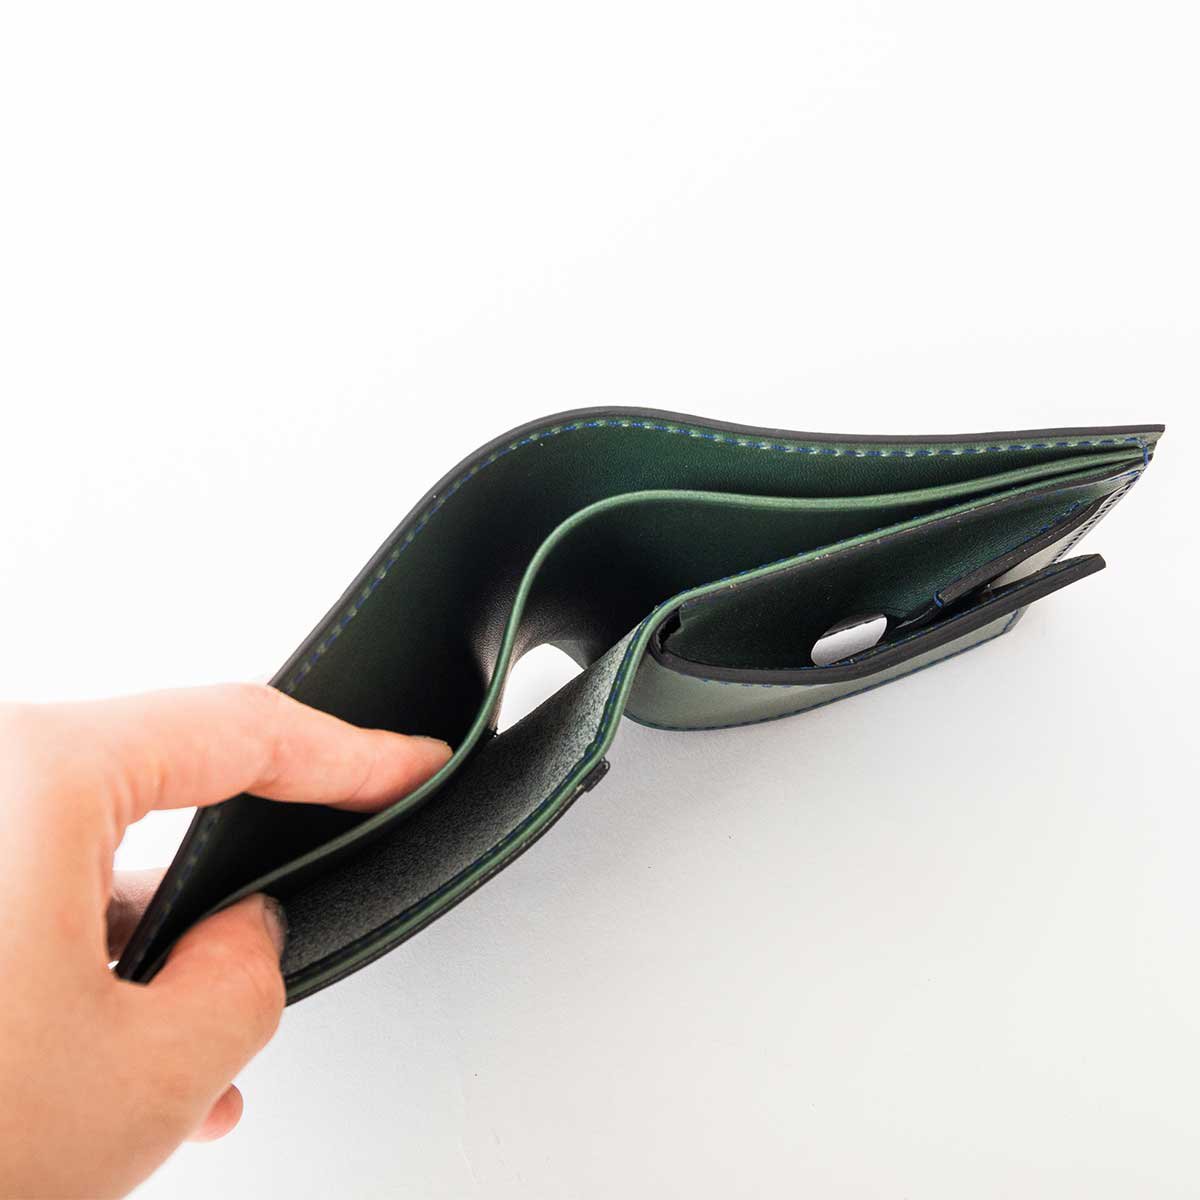 Foglia(フォーリア)二つ折り財布ボックスコインタイプ